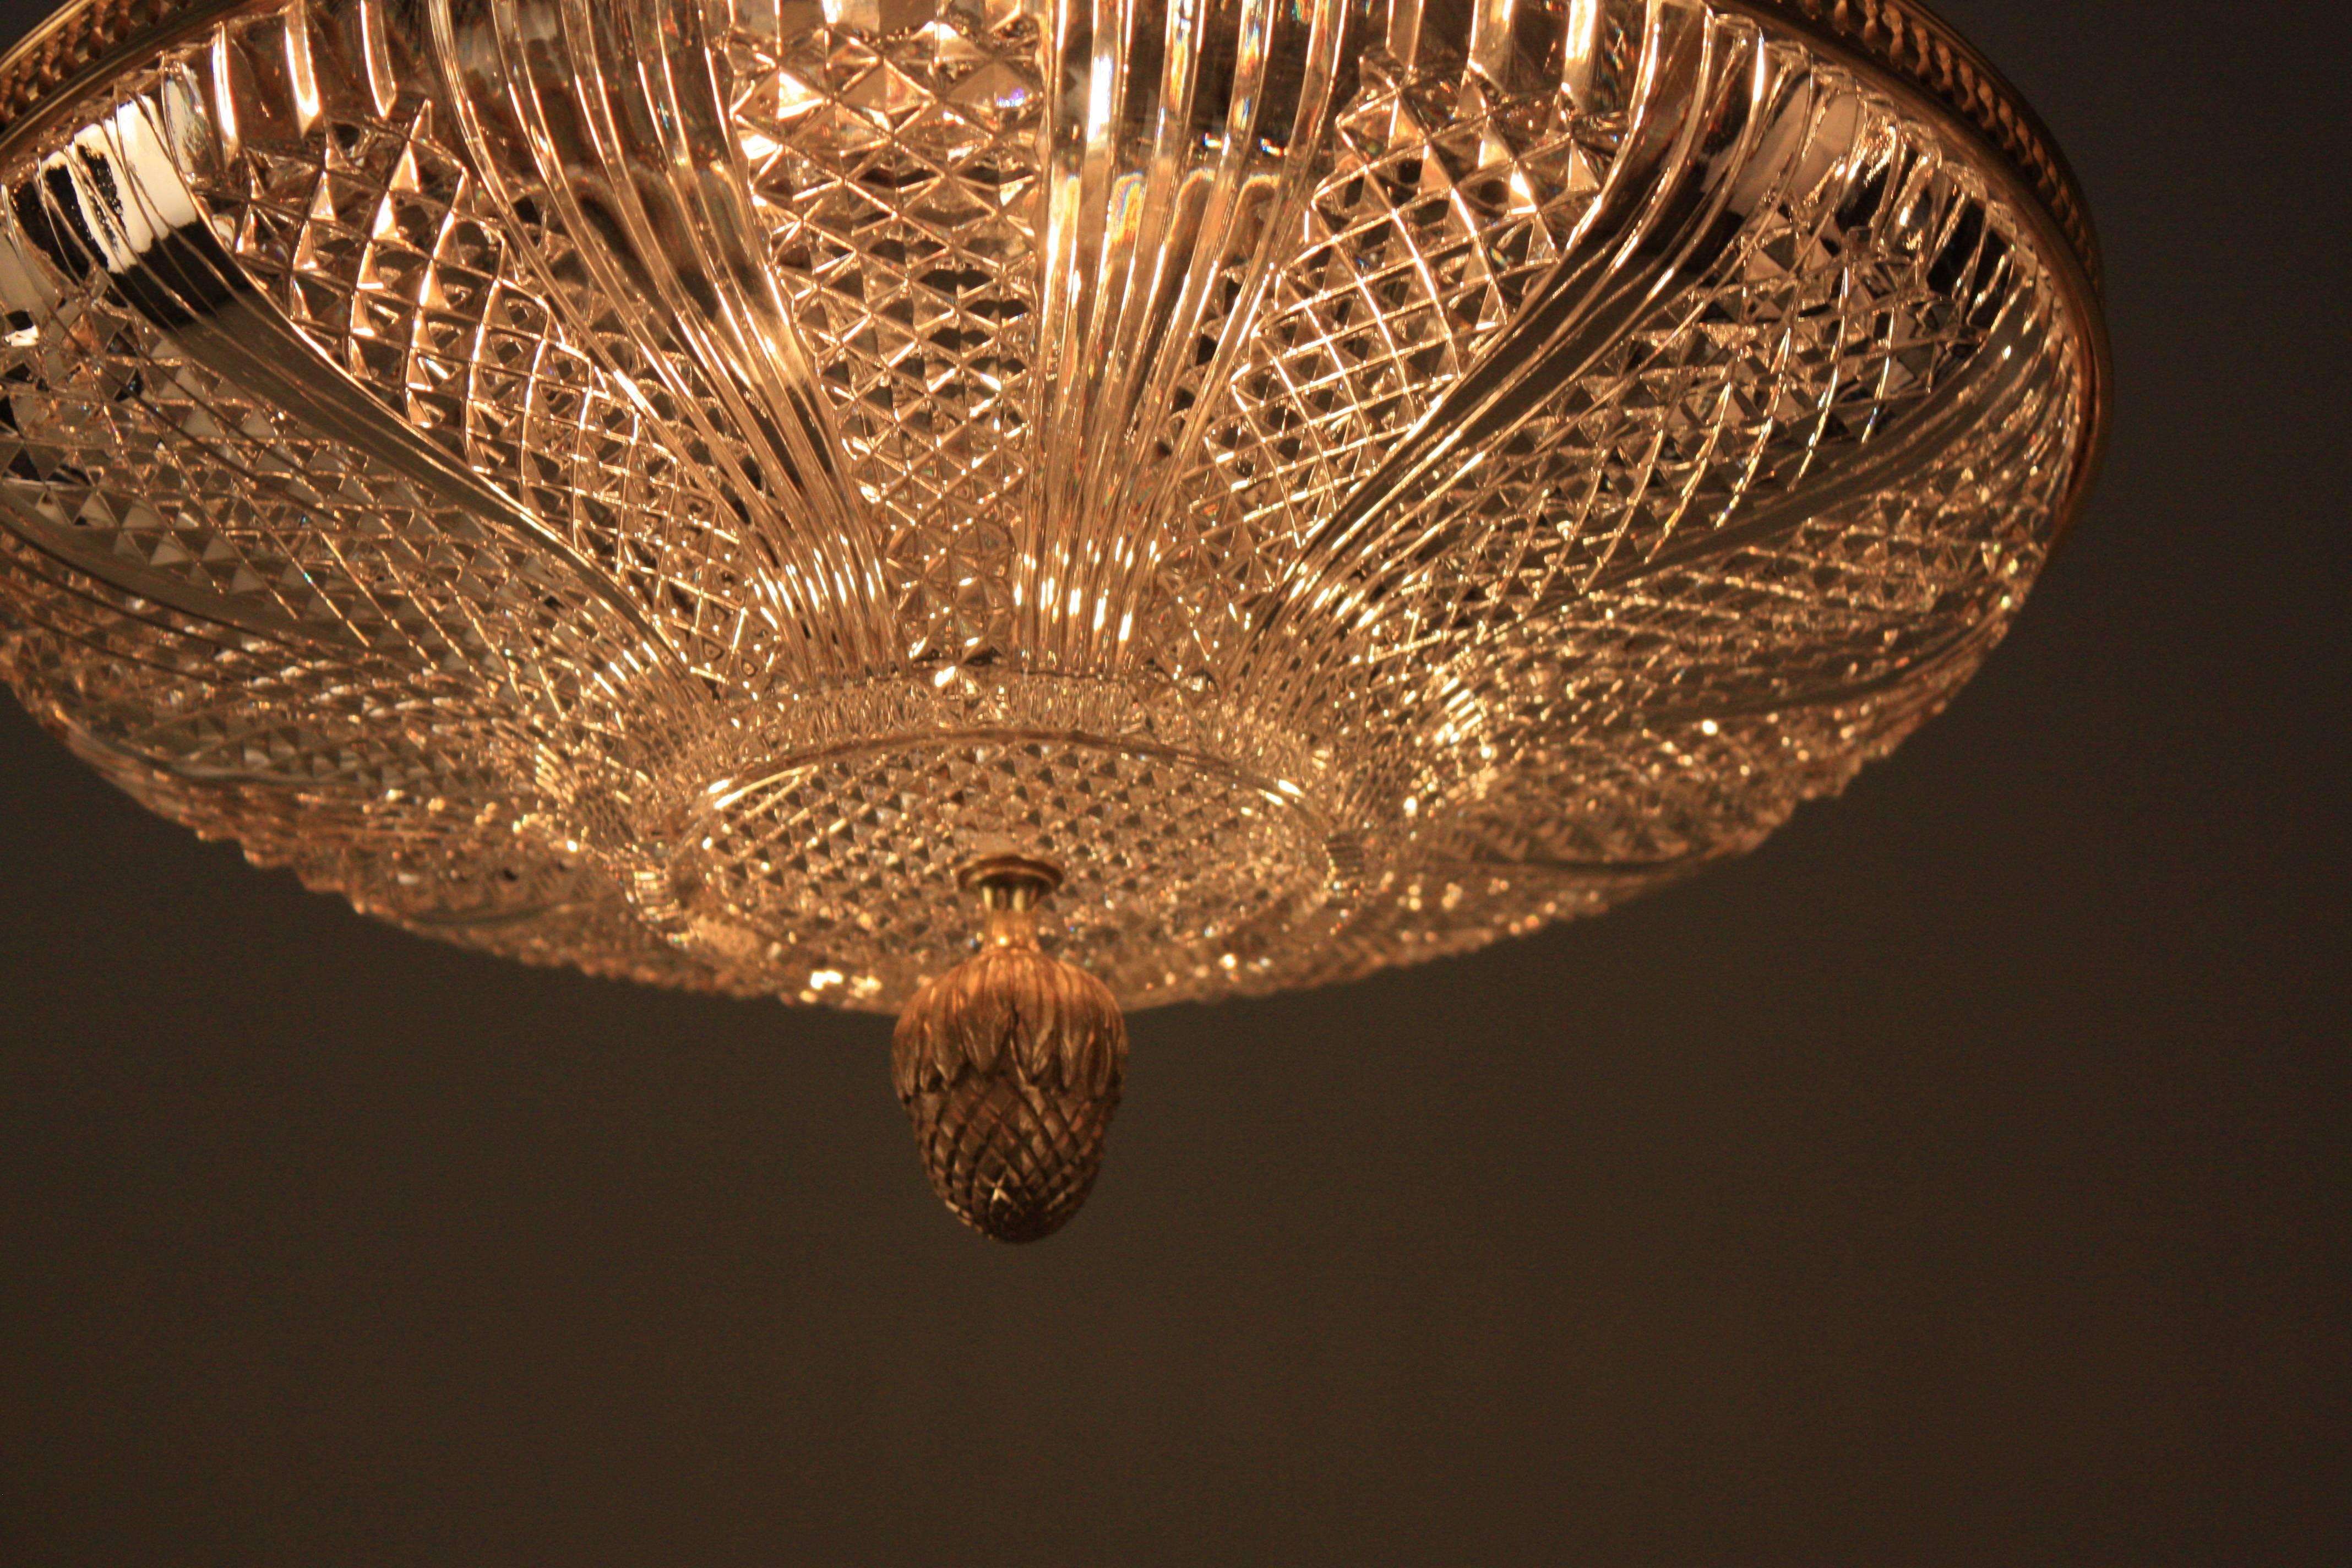 Elegant prismatic cut crystal flush mount ceiling light with bronze trim.
Total of four light 60watt each.